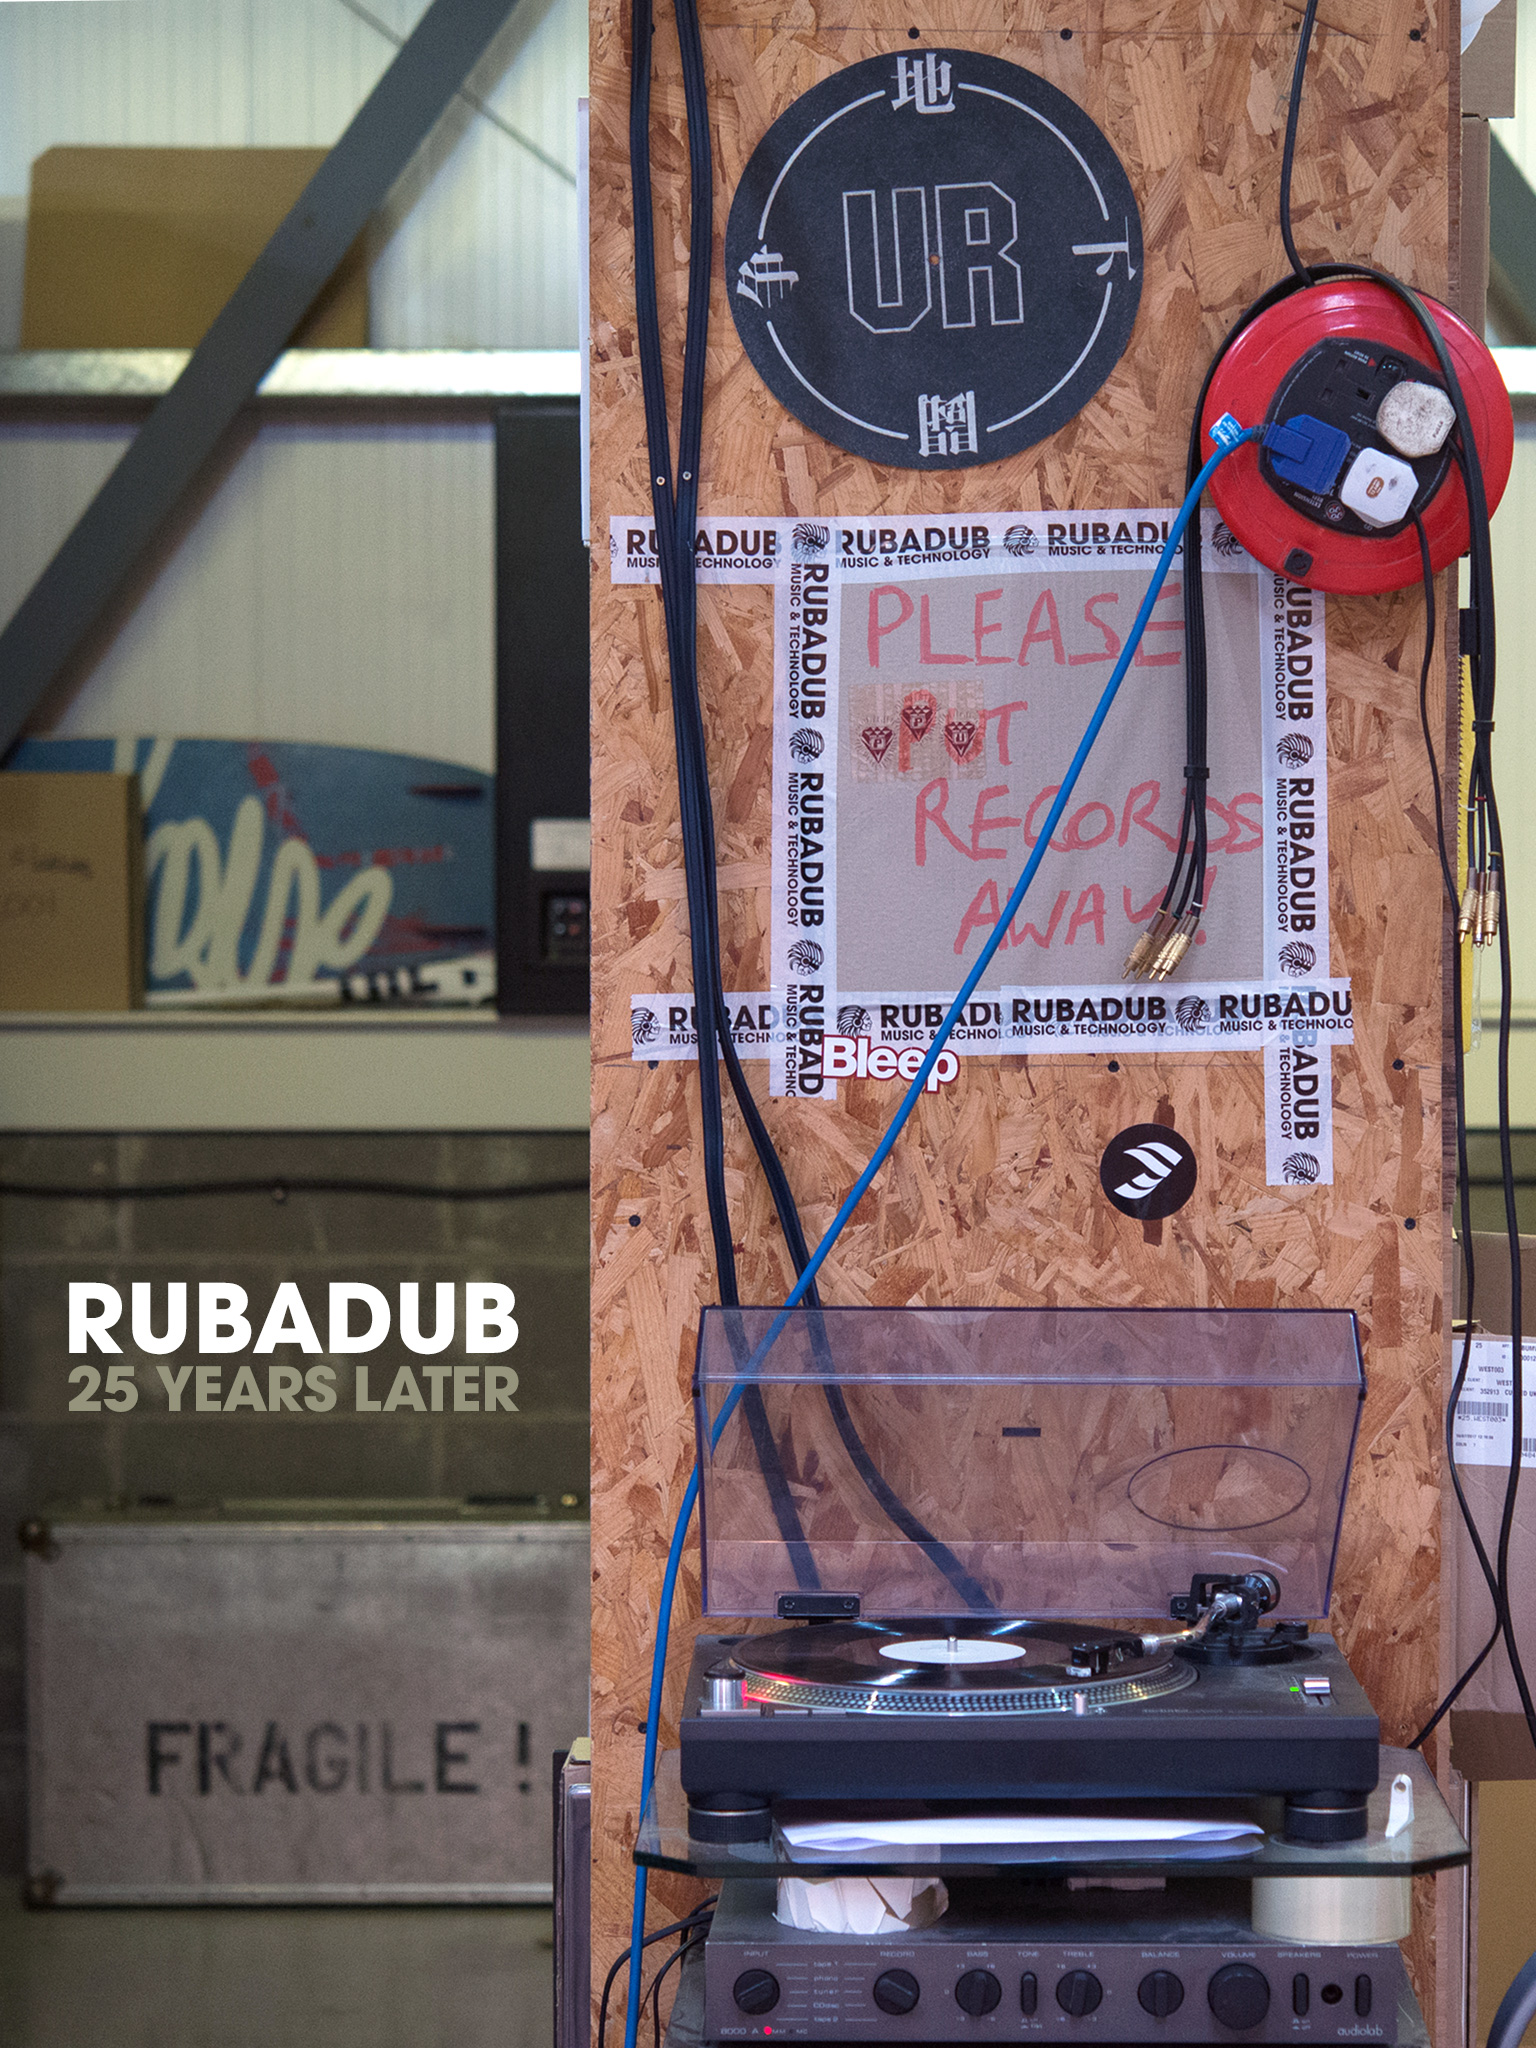 Rubadub: 25 years later